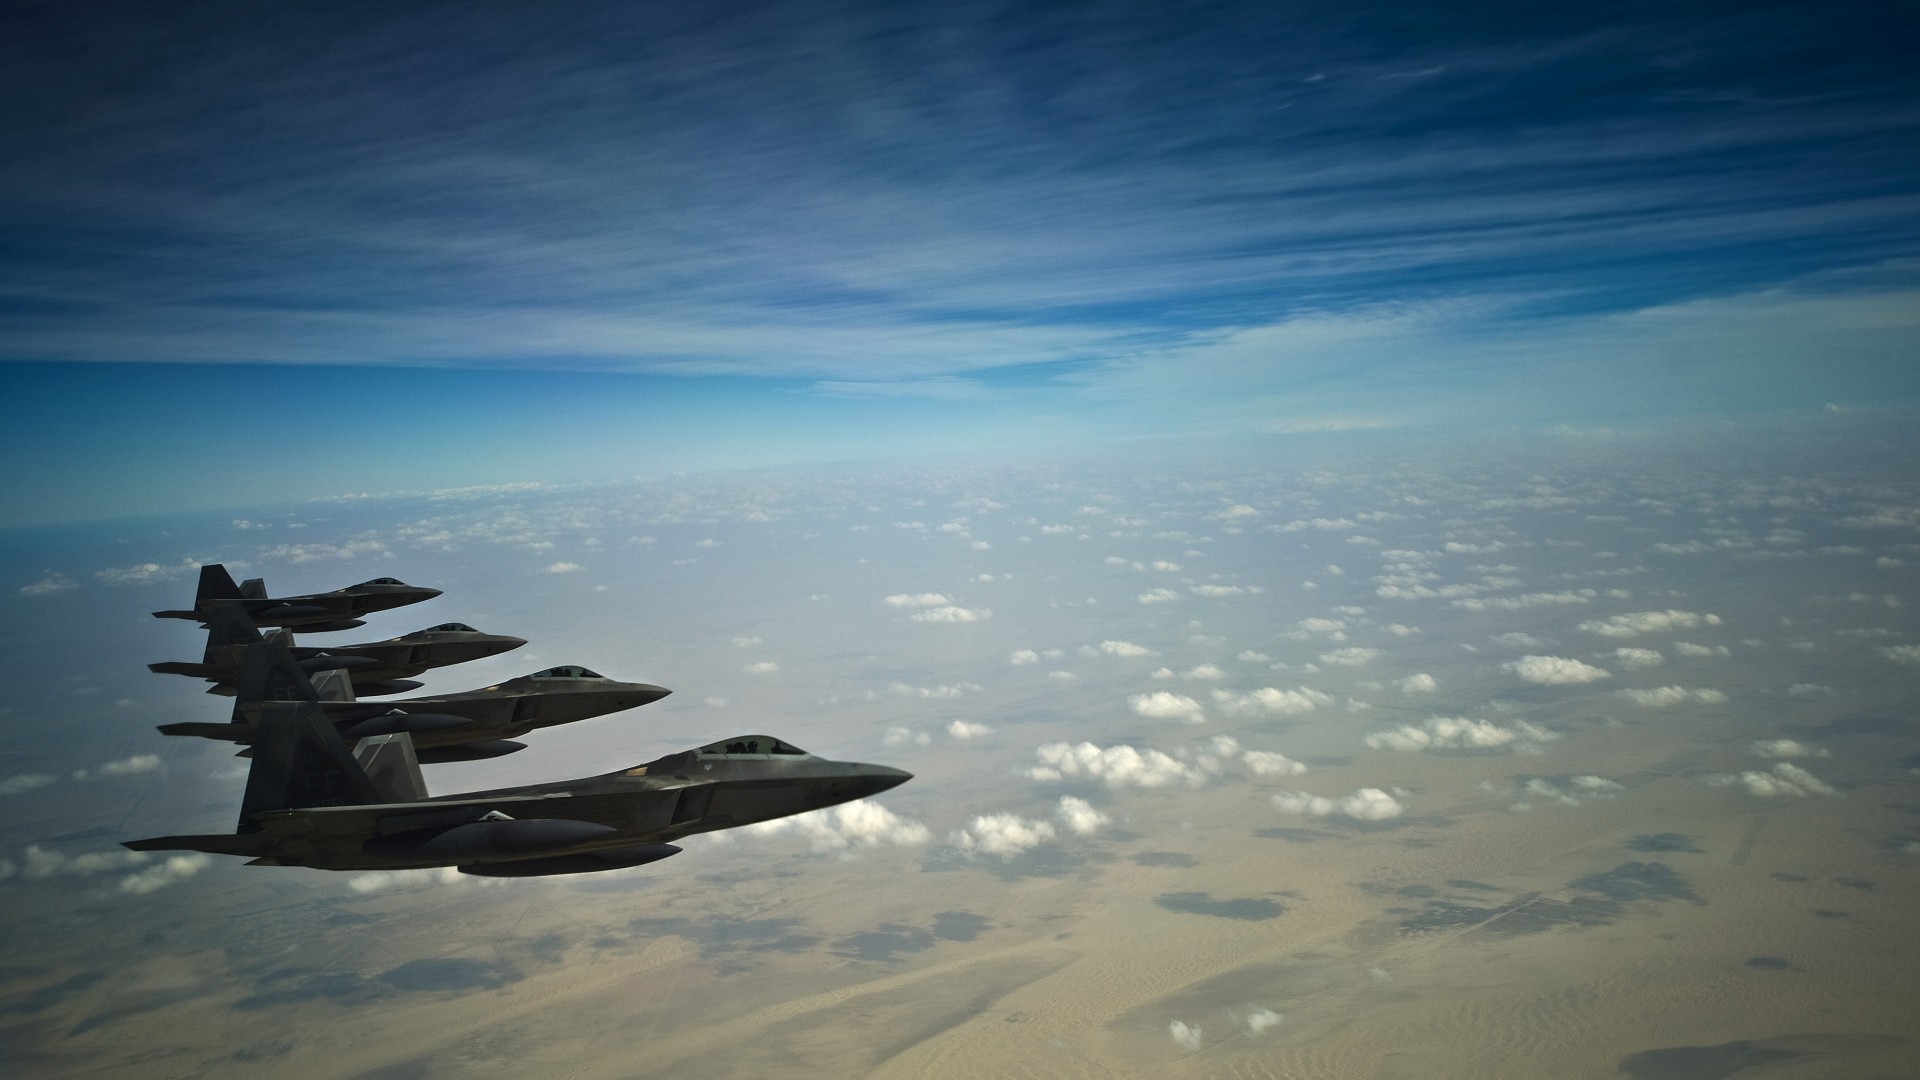 F-35, Lockheed, F-35A, Lightning II, jet, aircraft, military, airplane, sky, clouds, U.S. Air Force (horizontal)